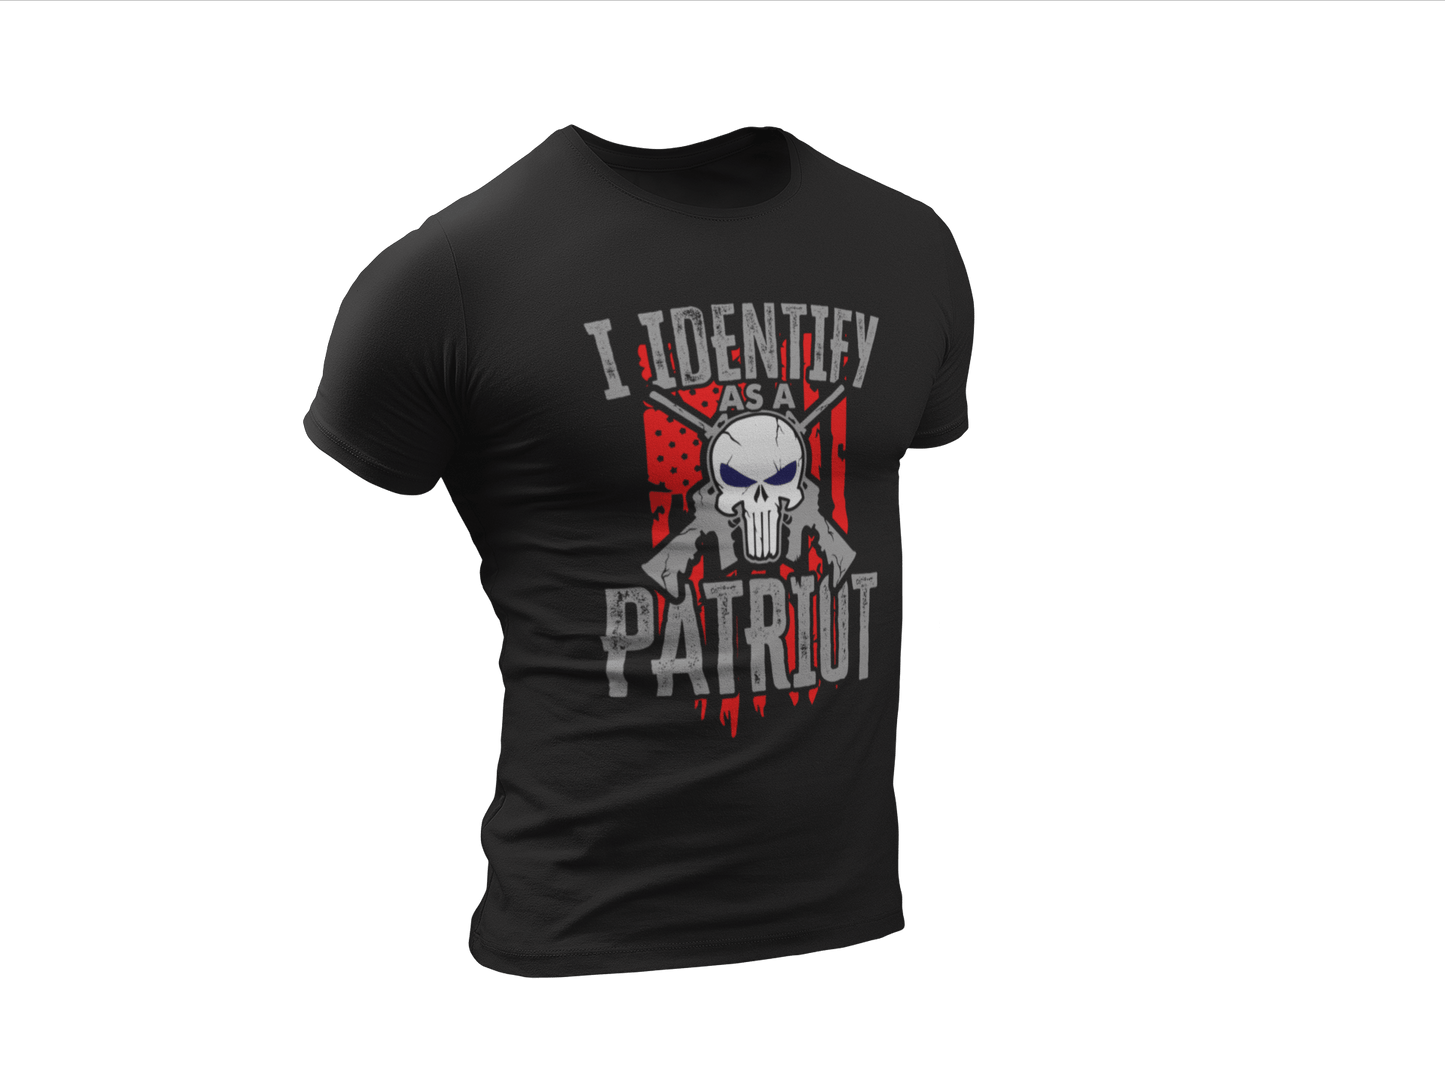 I Identify As a Patriot Shirt